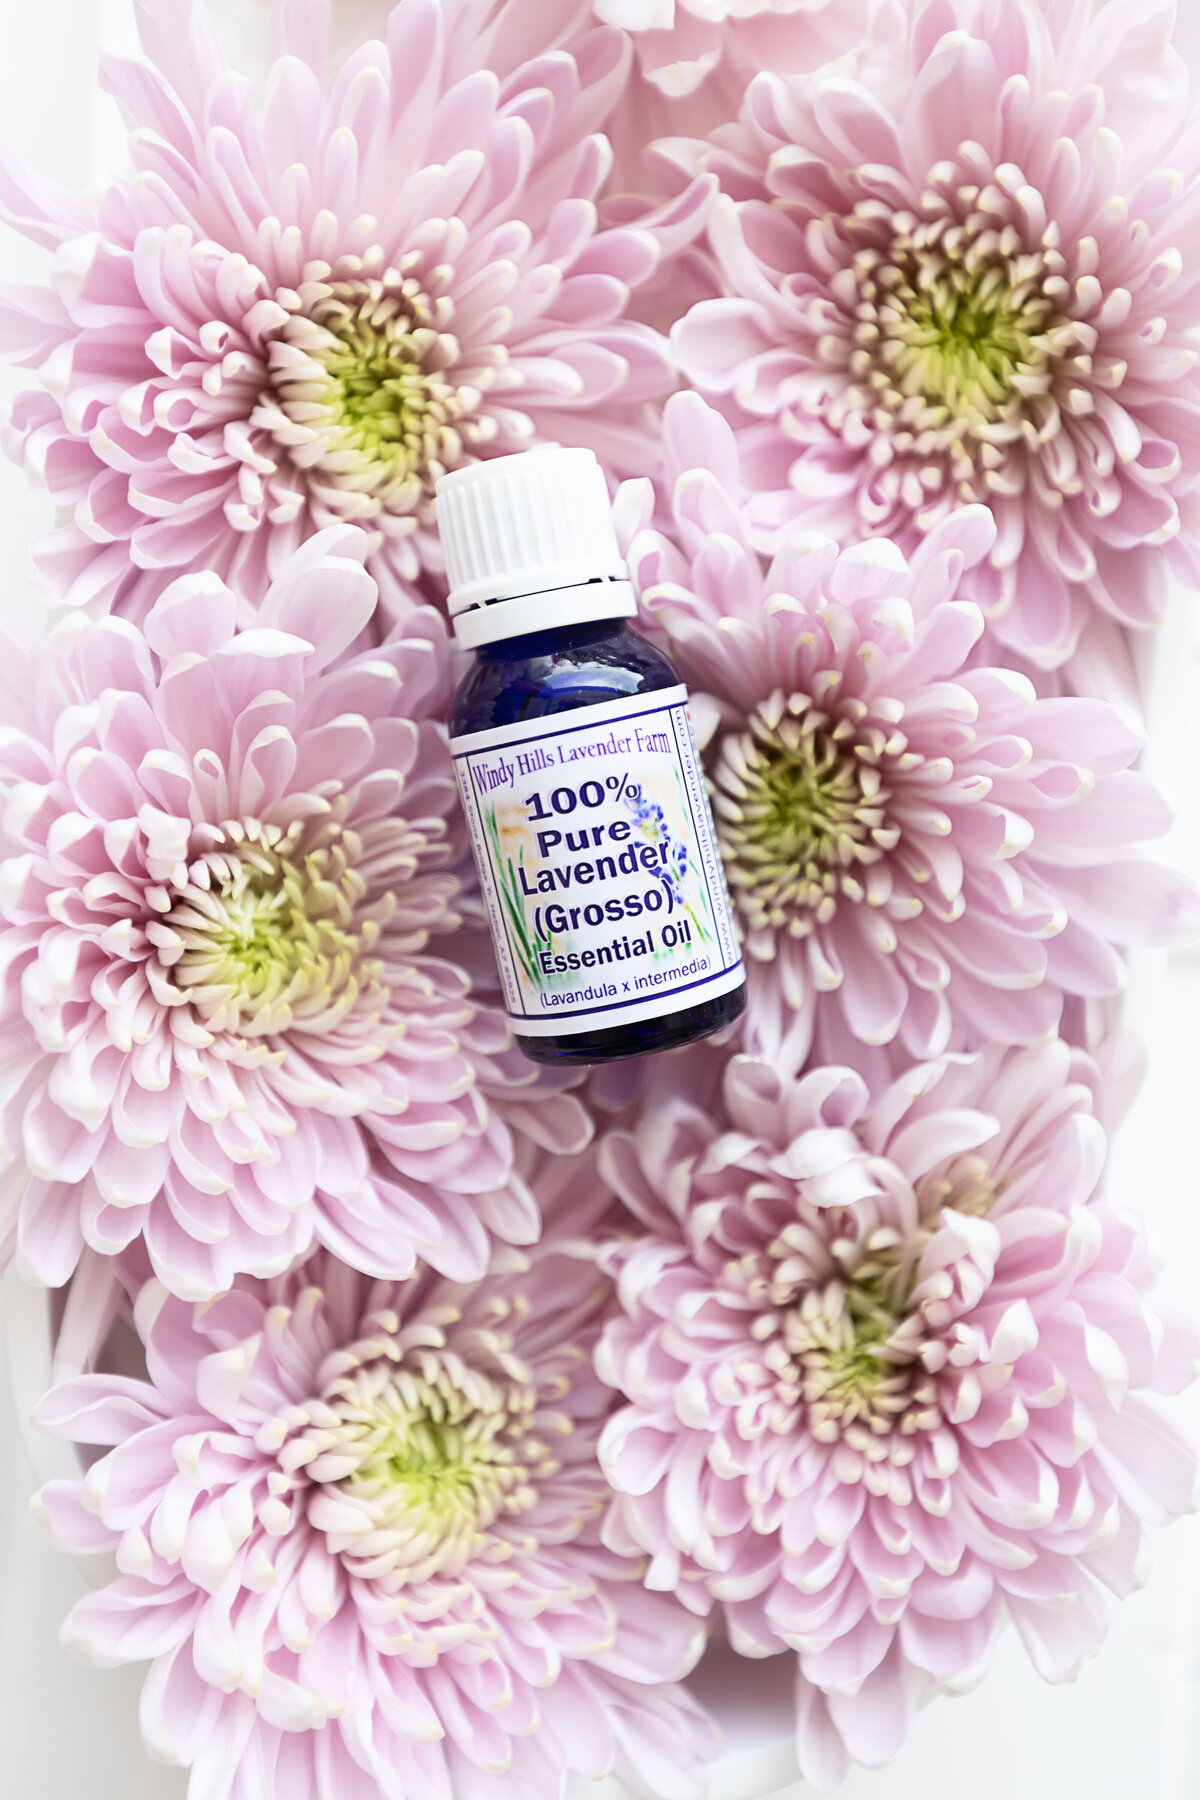 Vial of lavender essential oil on pink daisies